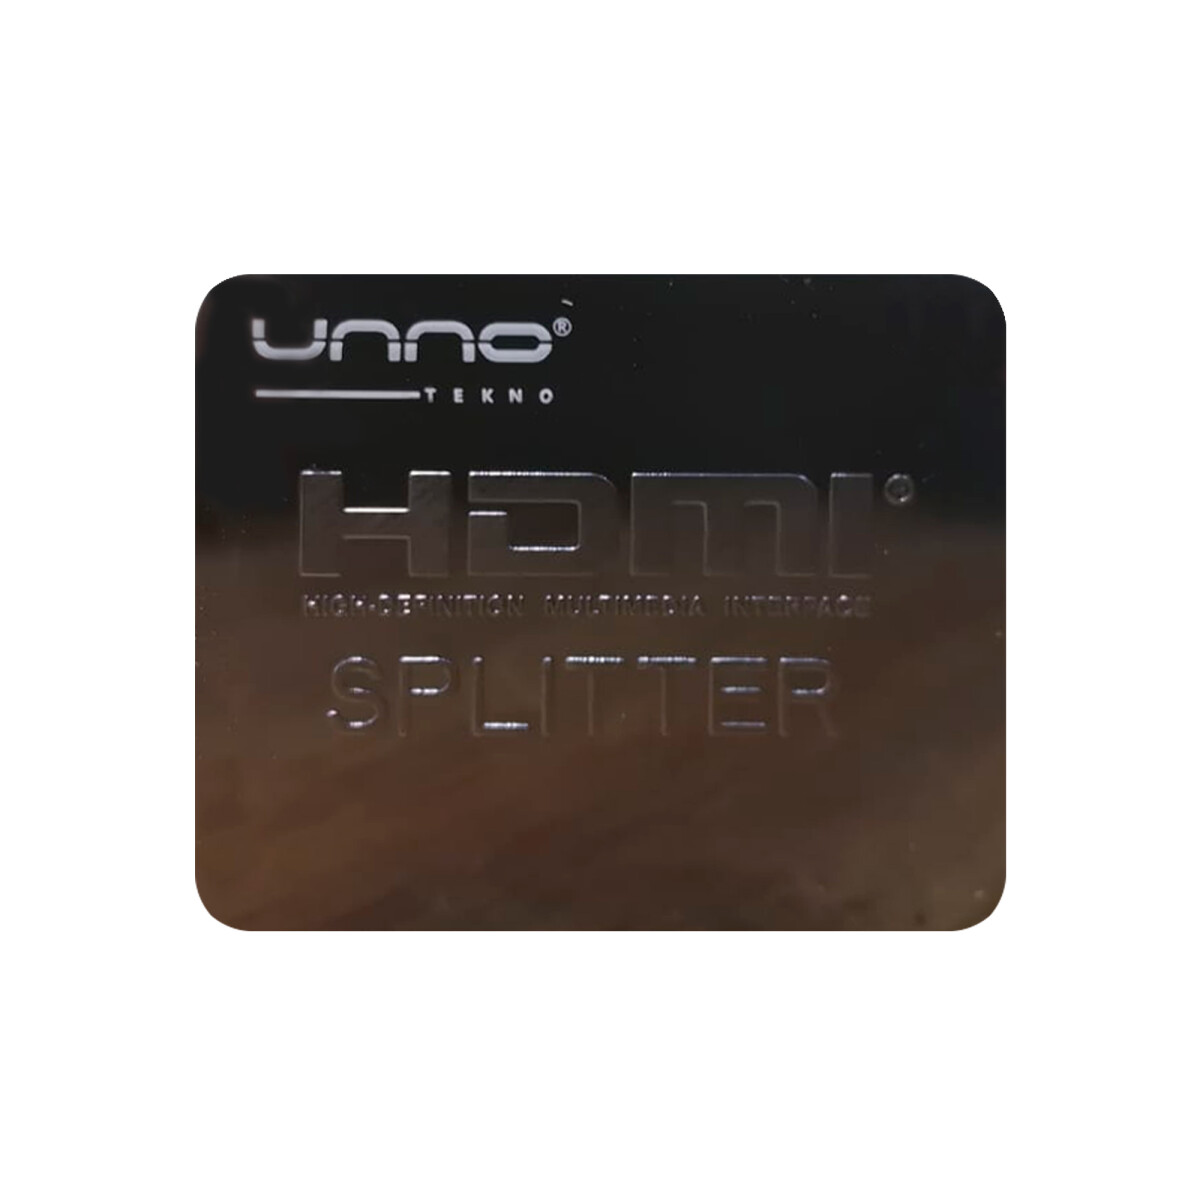 Unno - Splitter HDMI 2 Puertos HB1204BK - 1 Entrada / 2 Salidas. 4K X 2K (3840 X 2160) a 30 Hz. - 001 